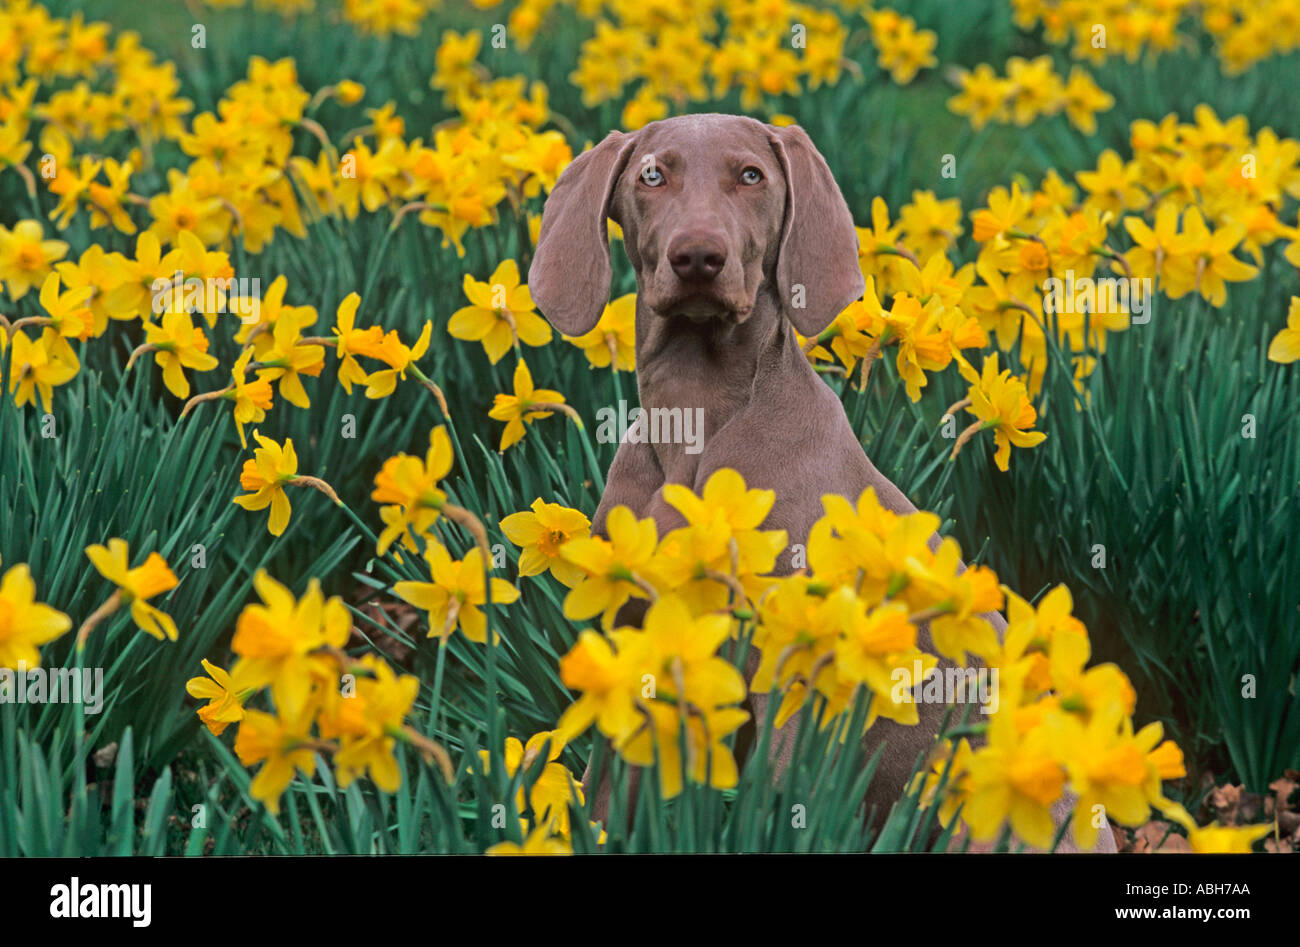 Weimaraner Dog in Daffodils Stock Photo